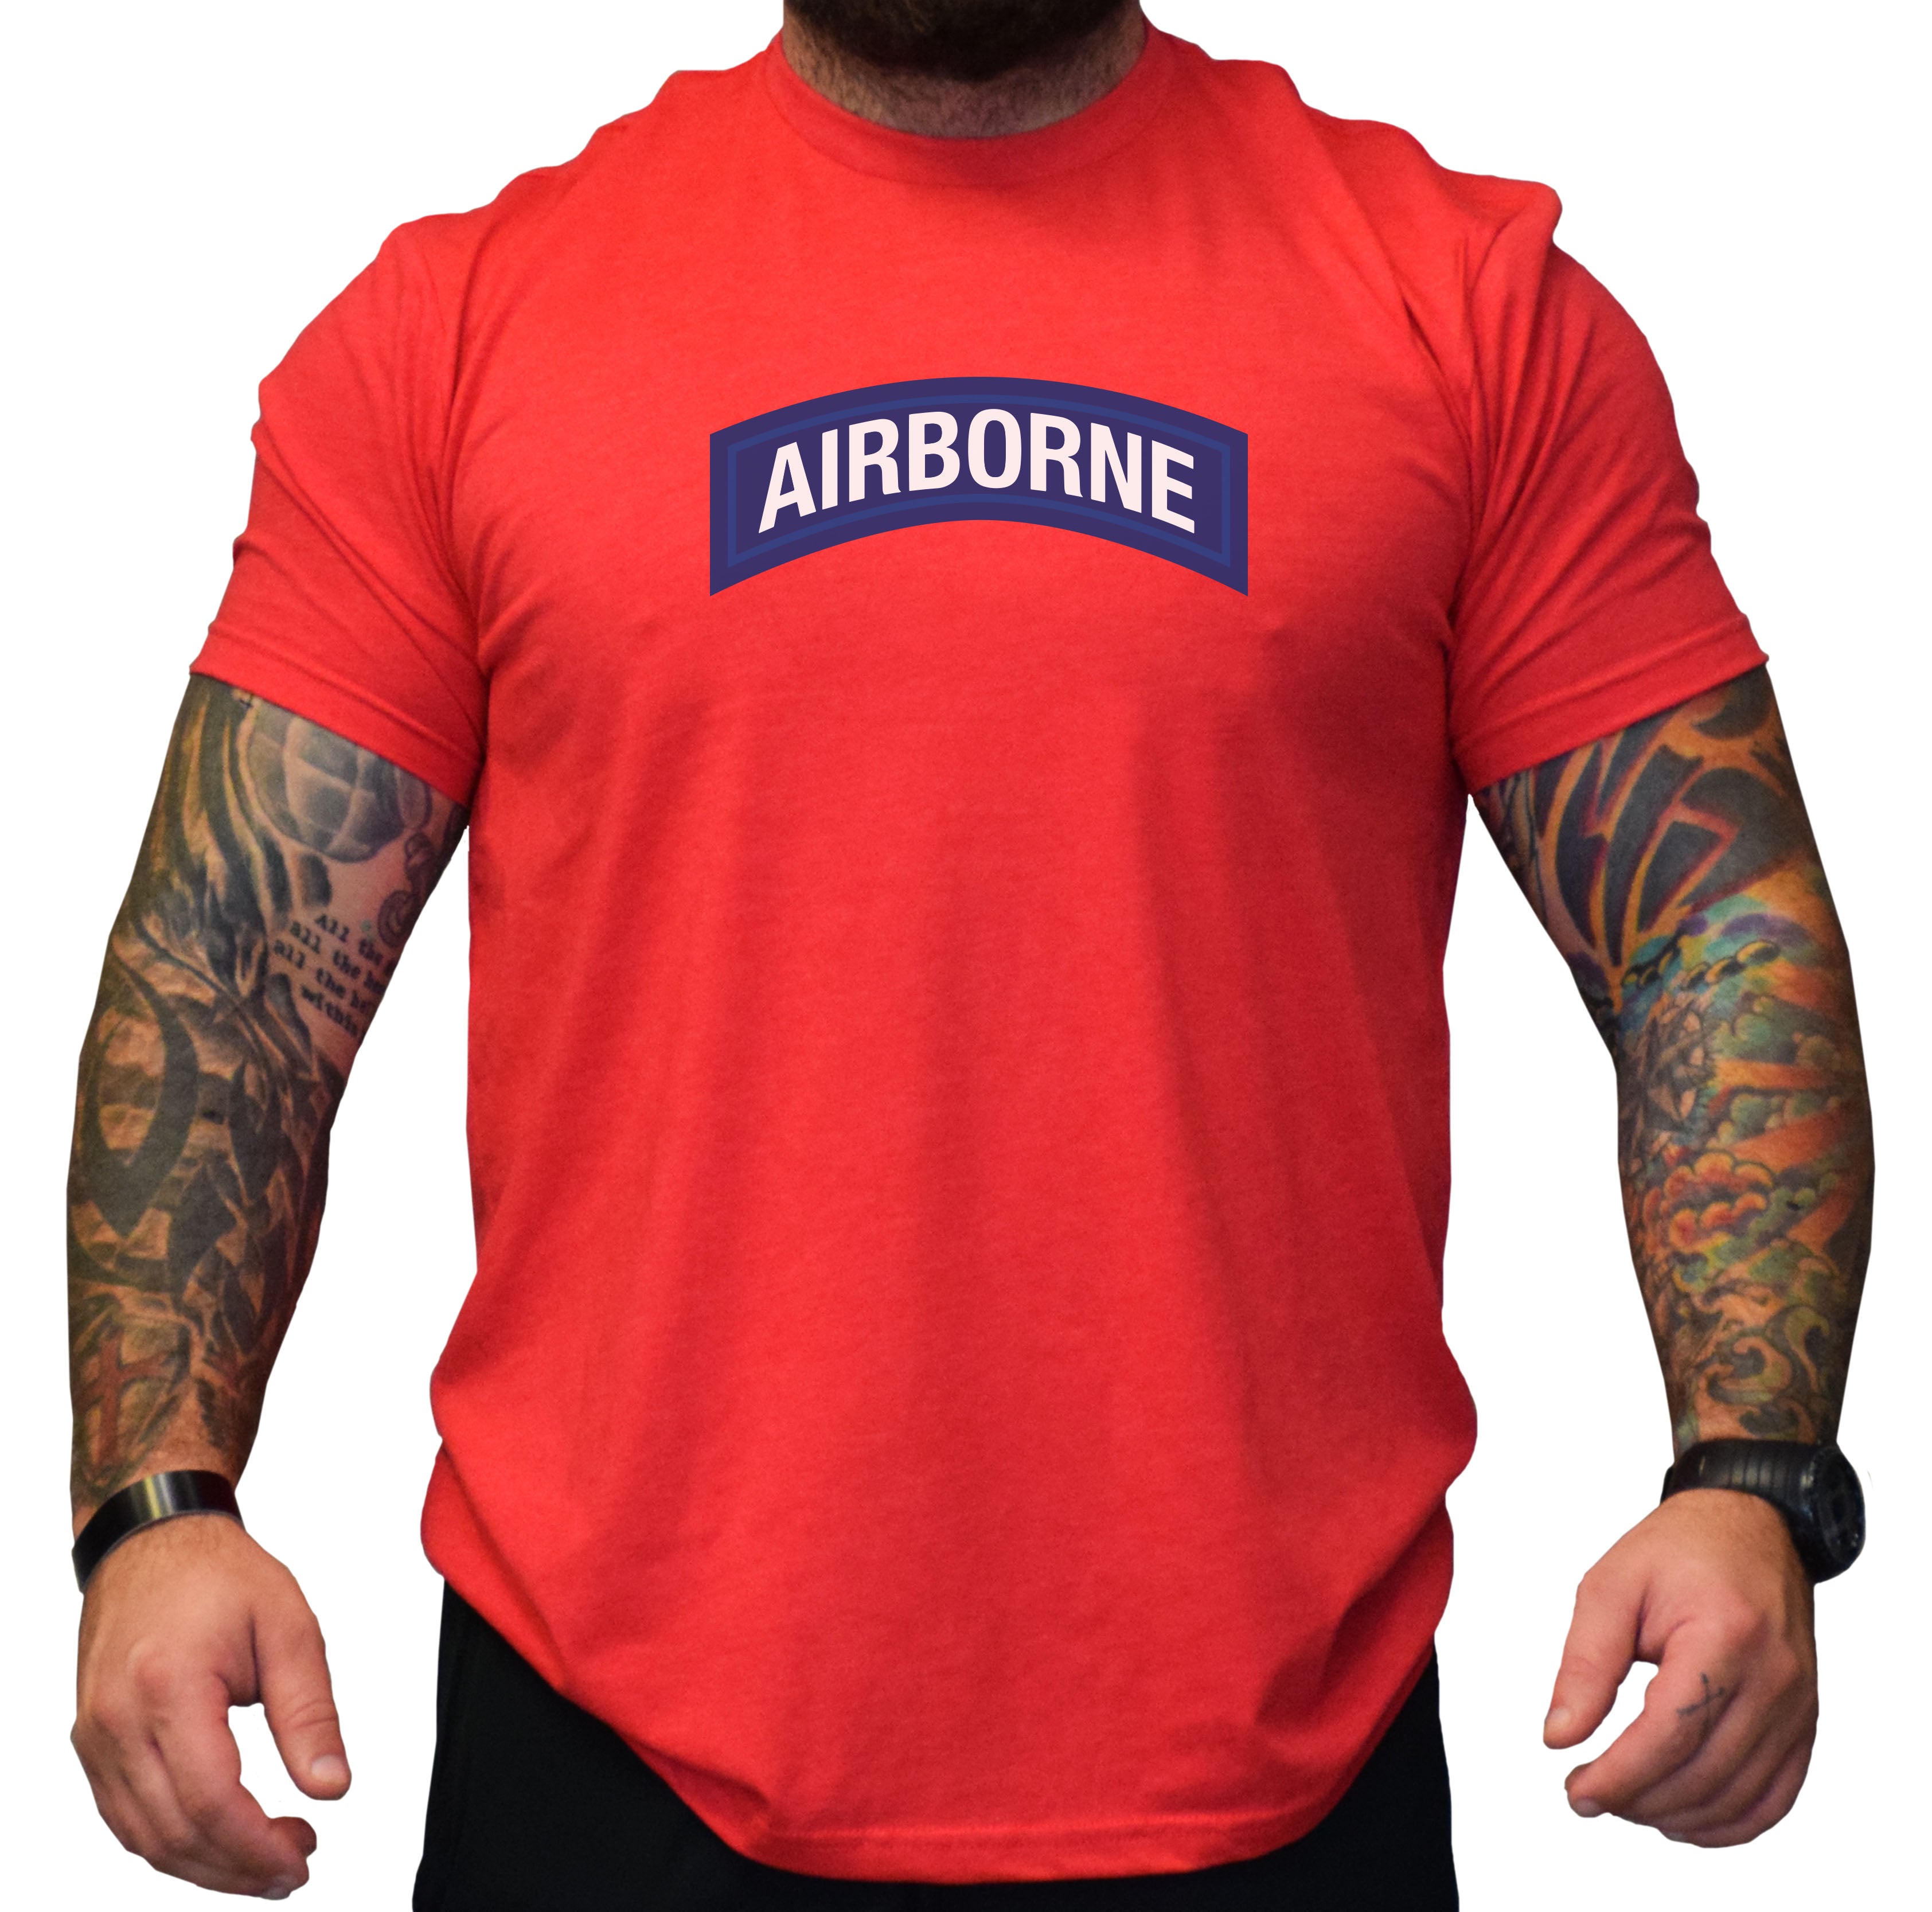 Airborne Tab T-Shirt